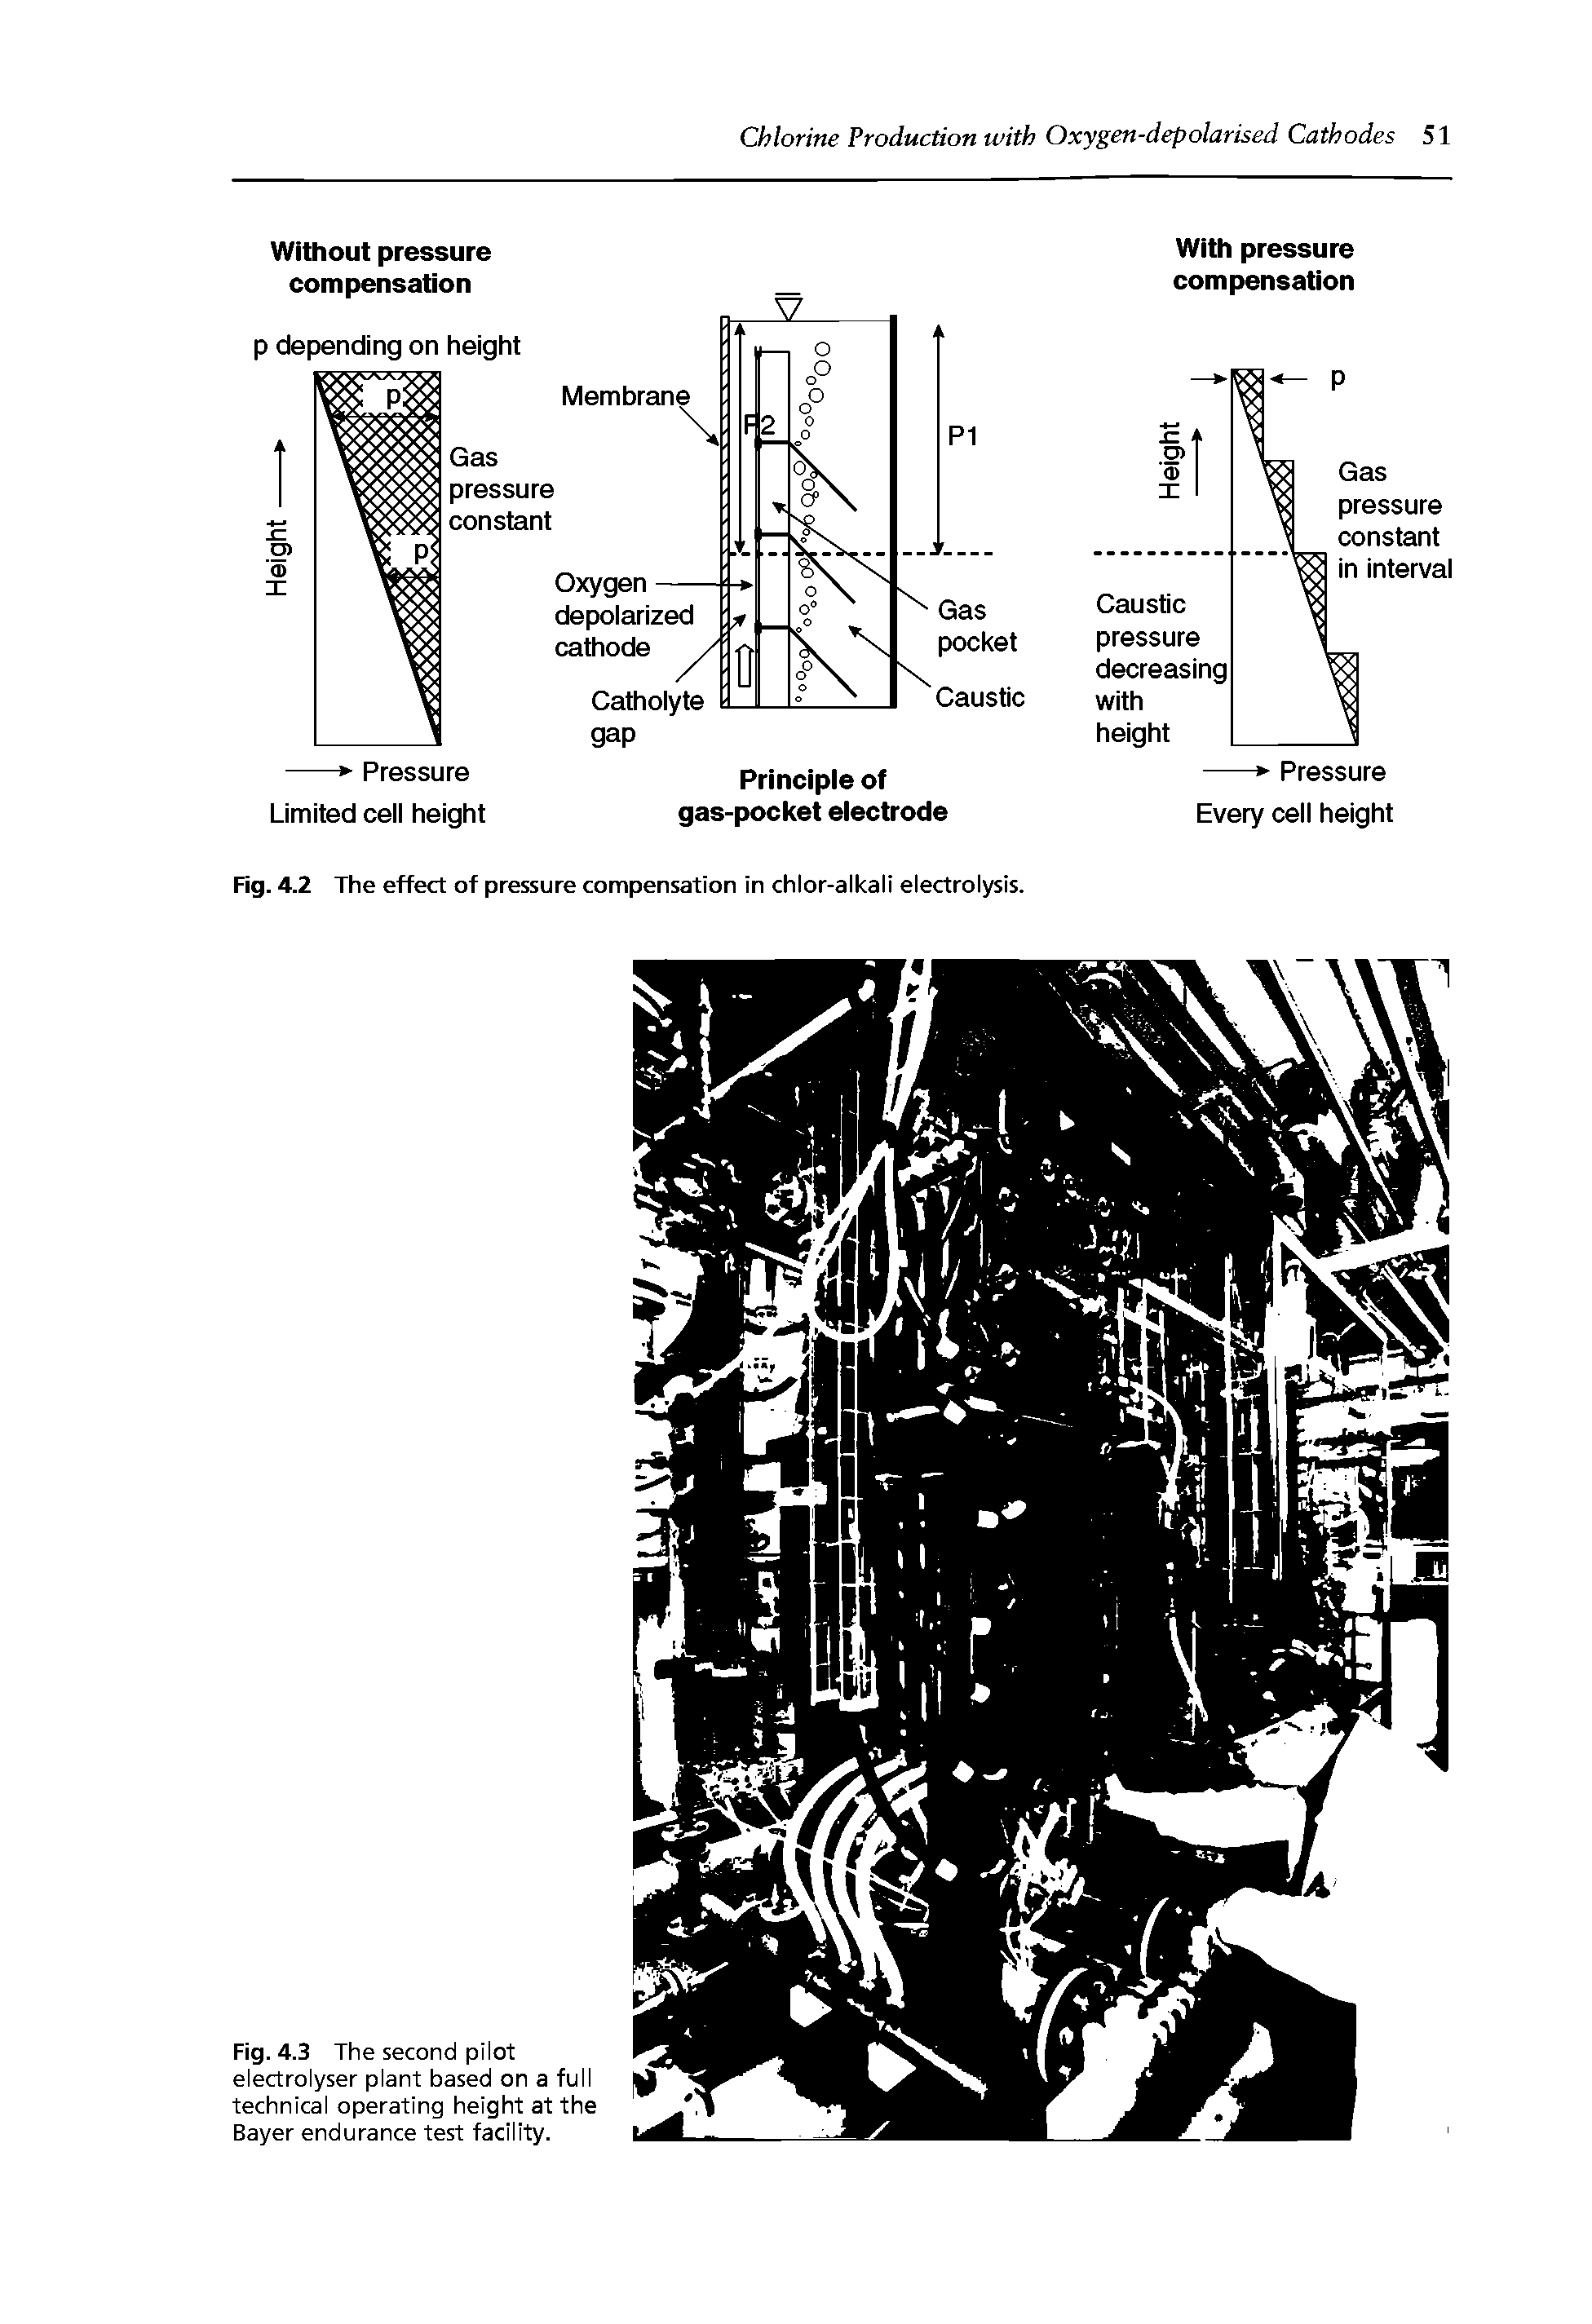 Fig. 4.2 The effect of pressure compensation in chlor-alkali electrolysis.